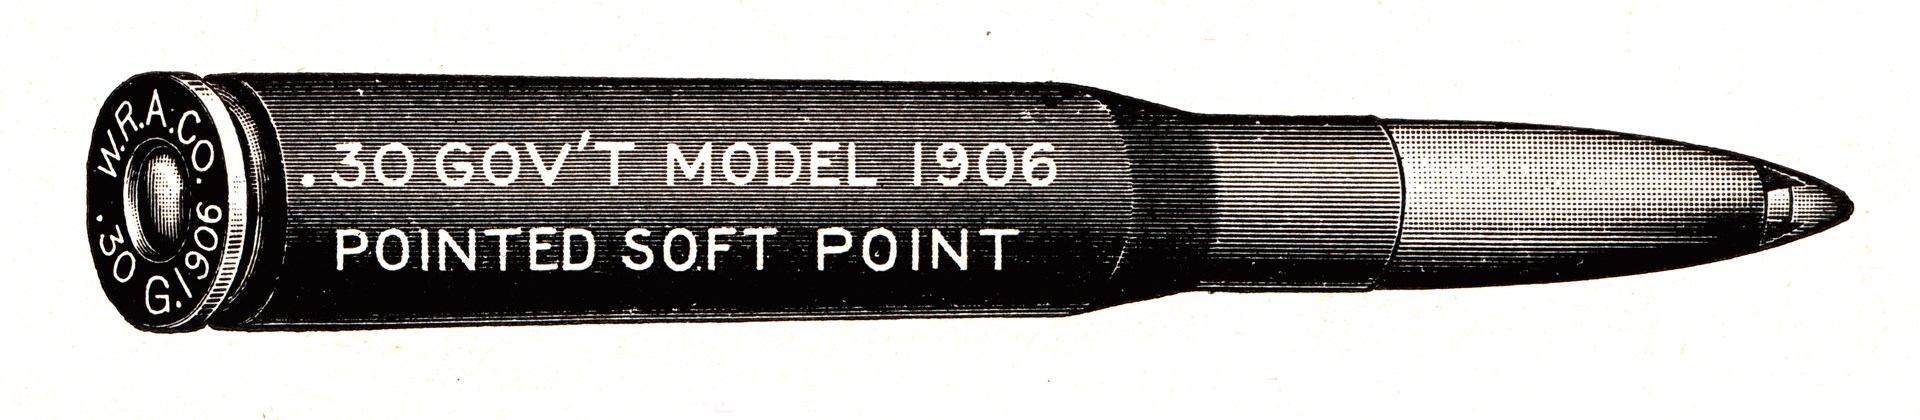 .30 govt model 1906 cartridge drawing